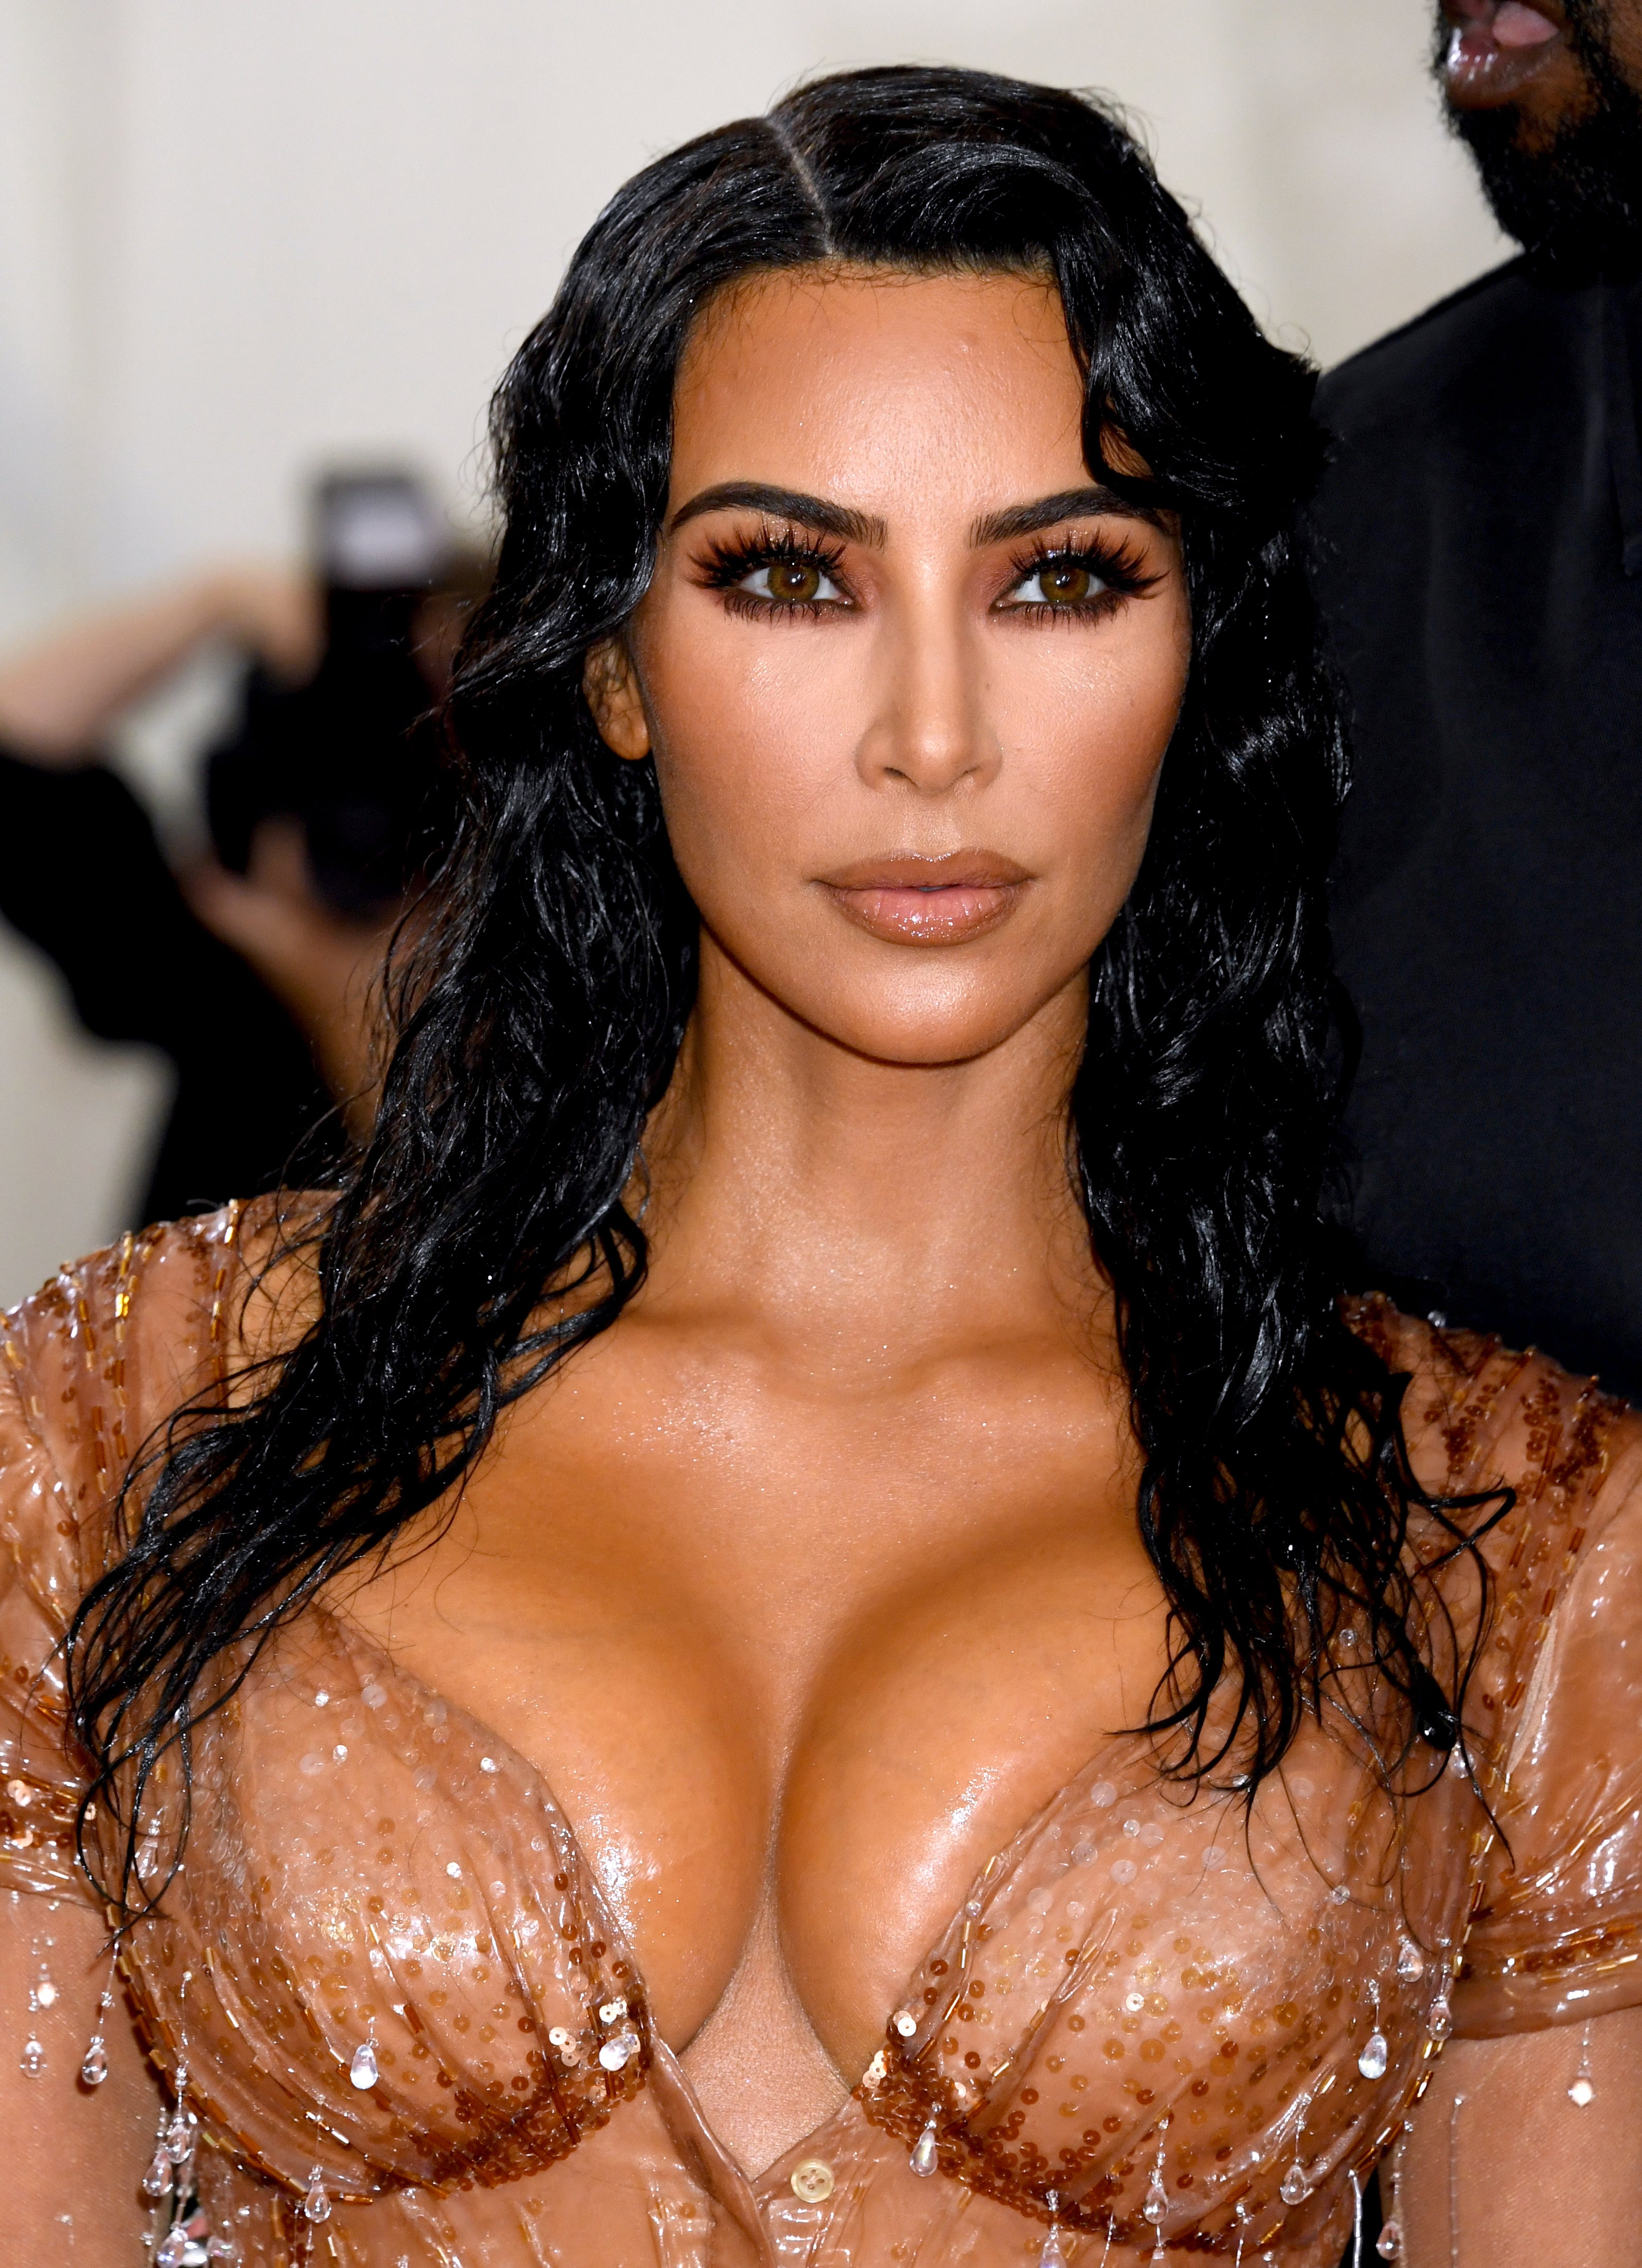 Kim Kardashian-West attending the Metropolitan Museum of Art Costume Institute Benefit Gala 2019 in New York, USA.